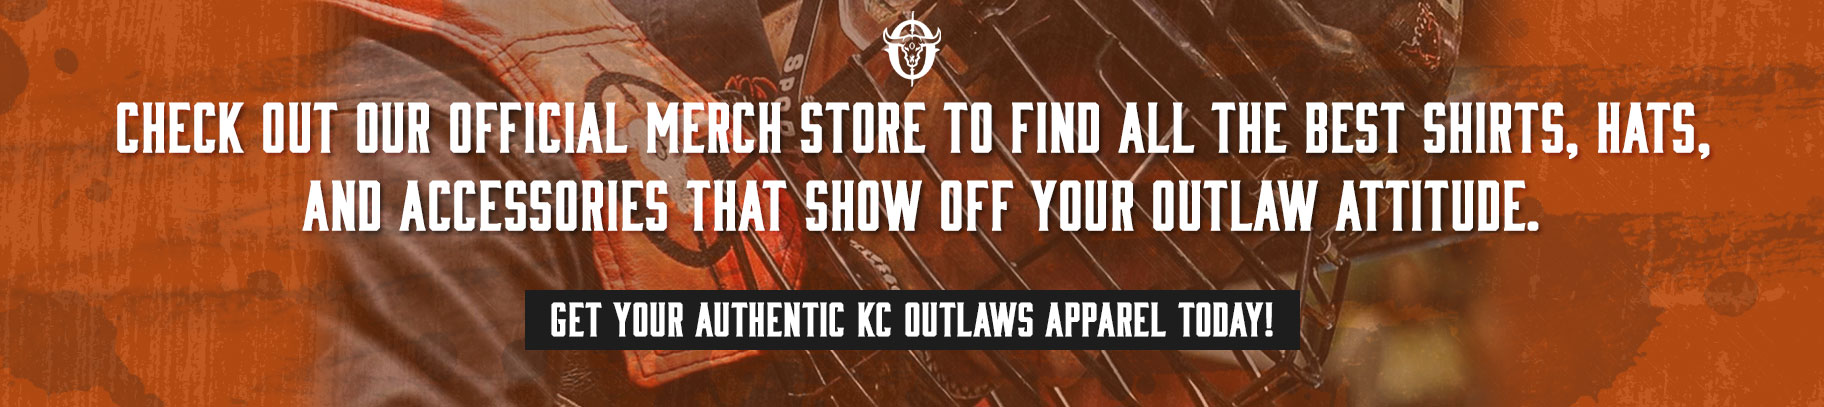 Shop for authentic KC Outlaws Apparel